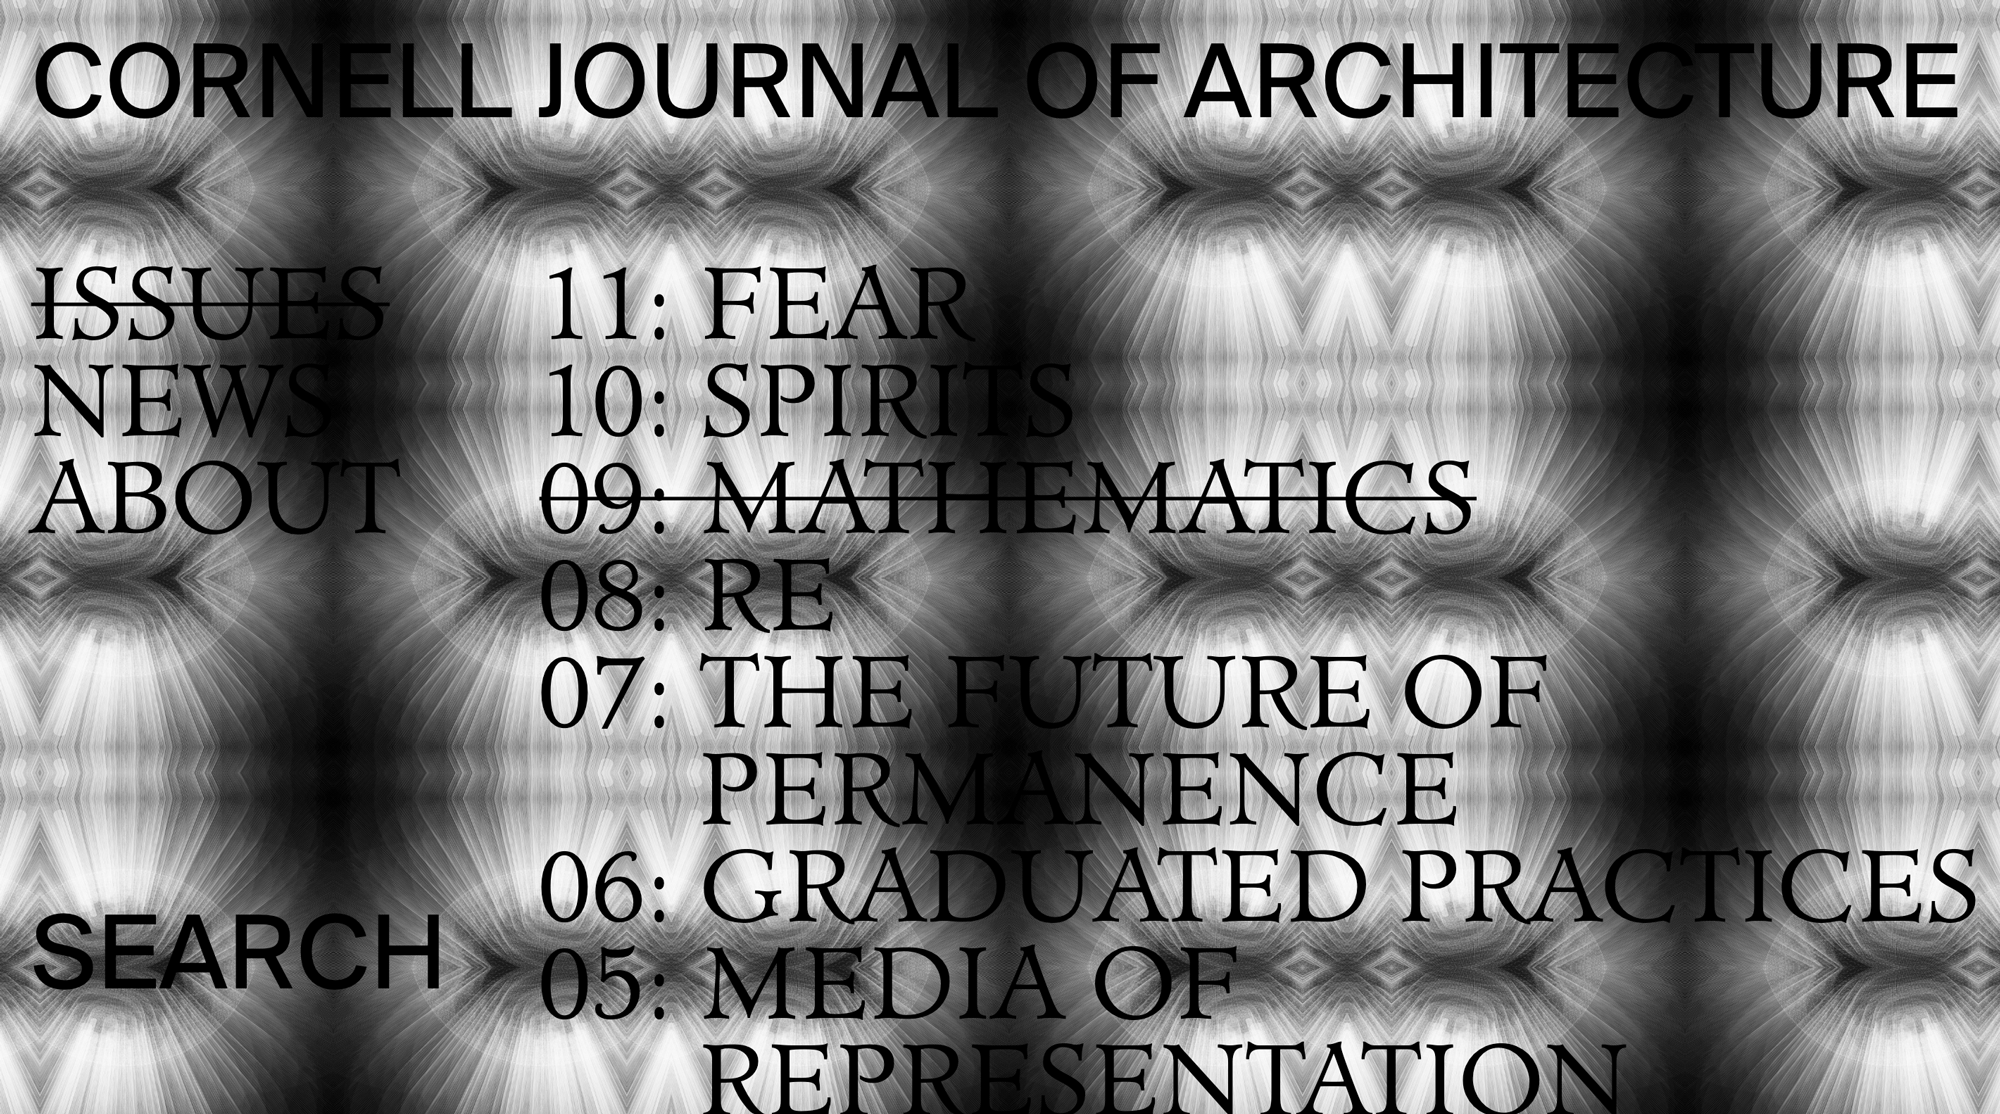 Cornell Journal Architecture